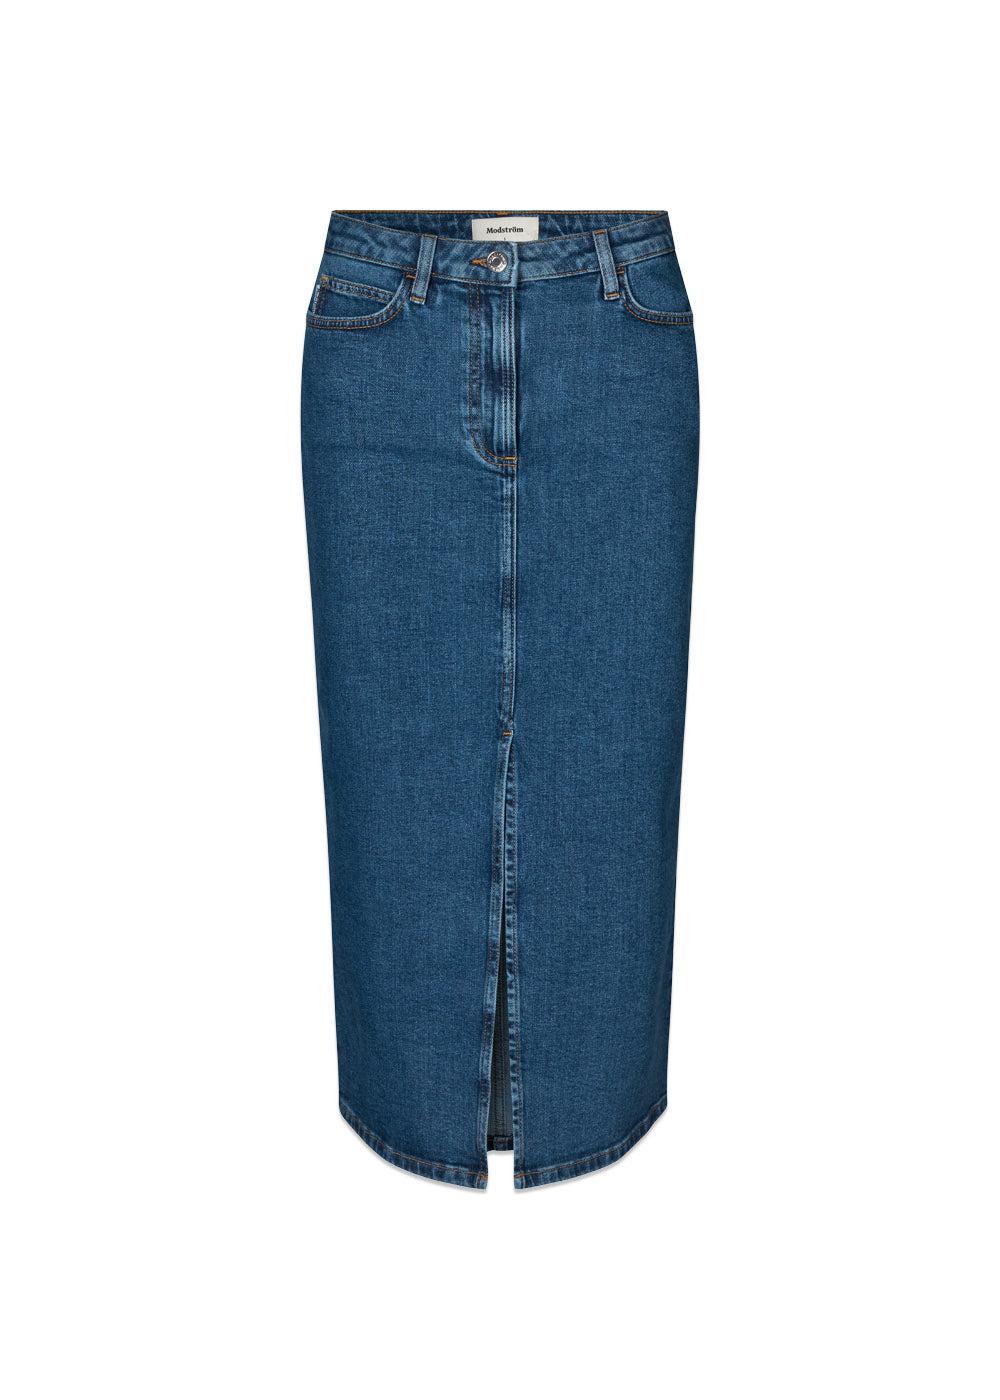 IvannaMD long skirt - Distressed Blue